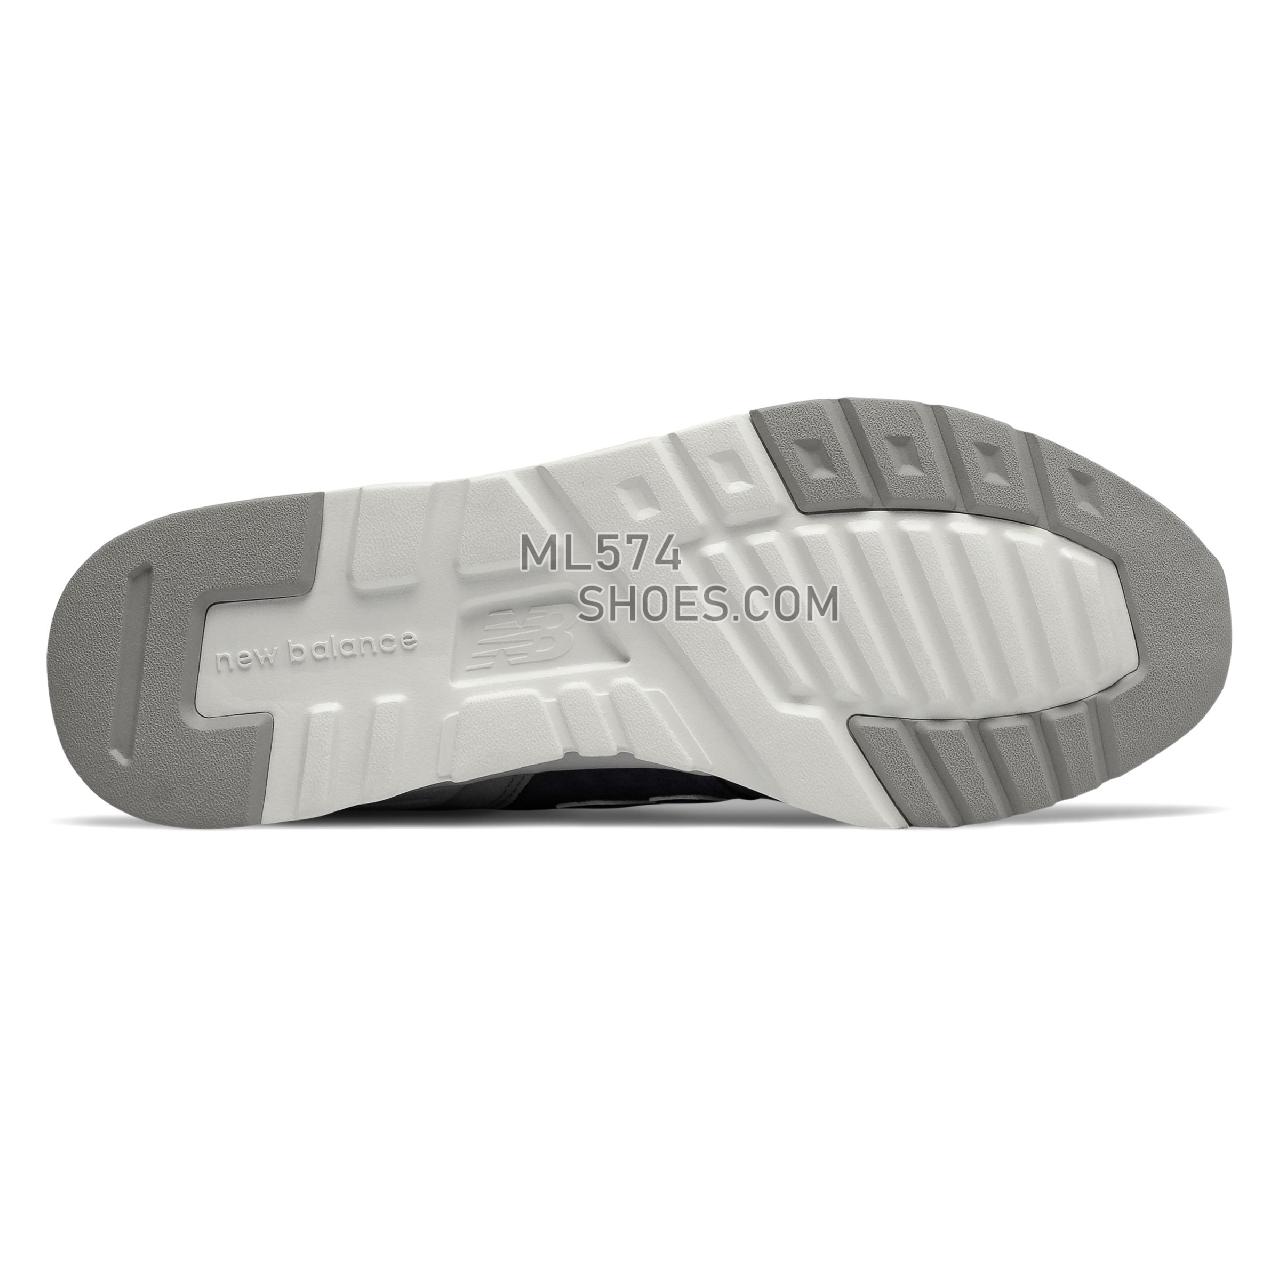 New Balance 997H - Men's Classic Sneakers - Eclipse with Rain Cloud - CM997HDQ